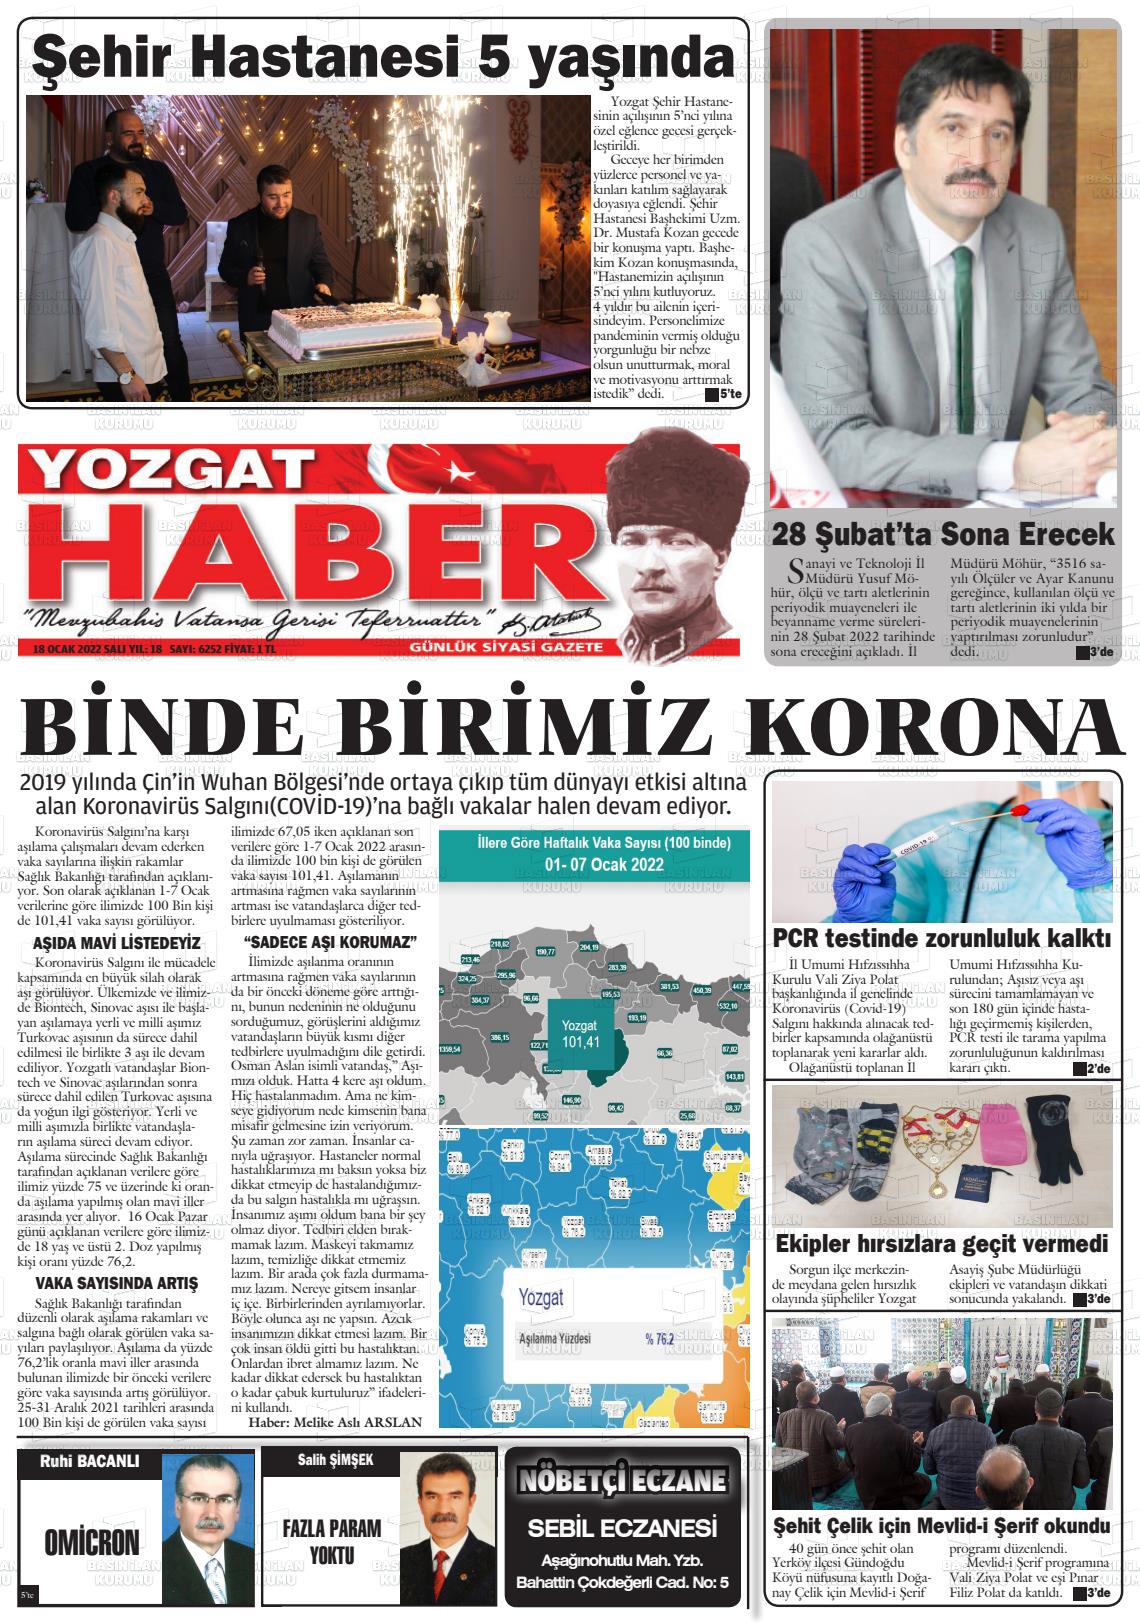 18 Ocak 2022 Yozgat Haber Gazete Manşeti